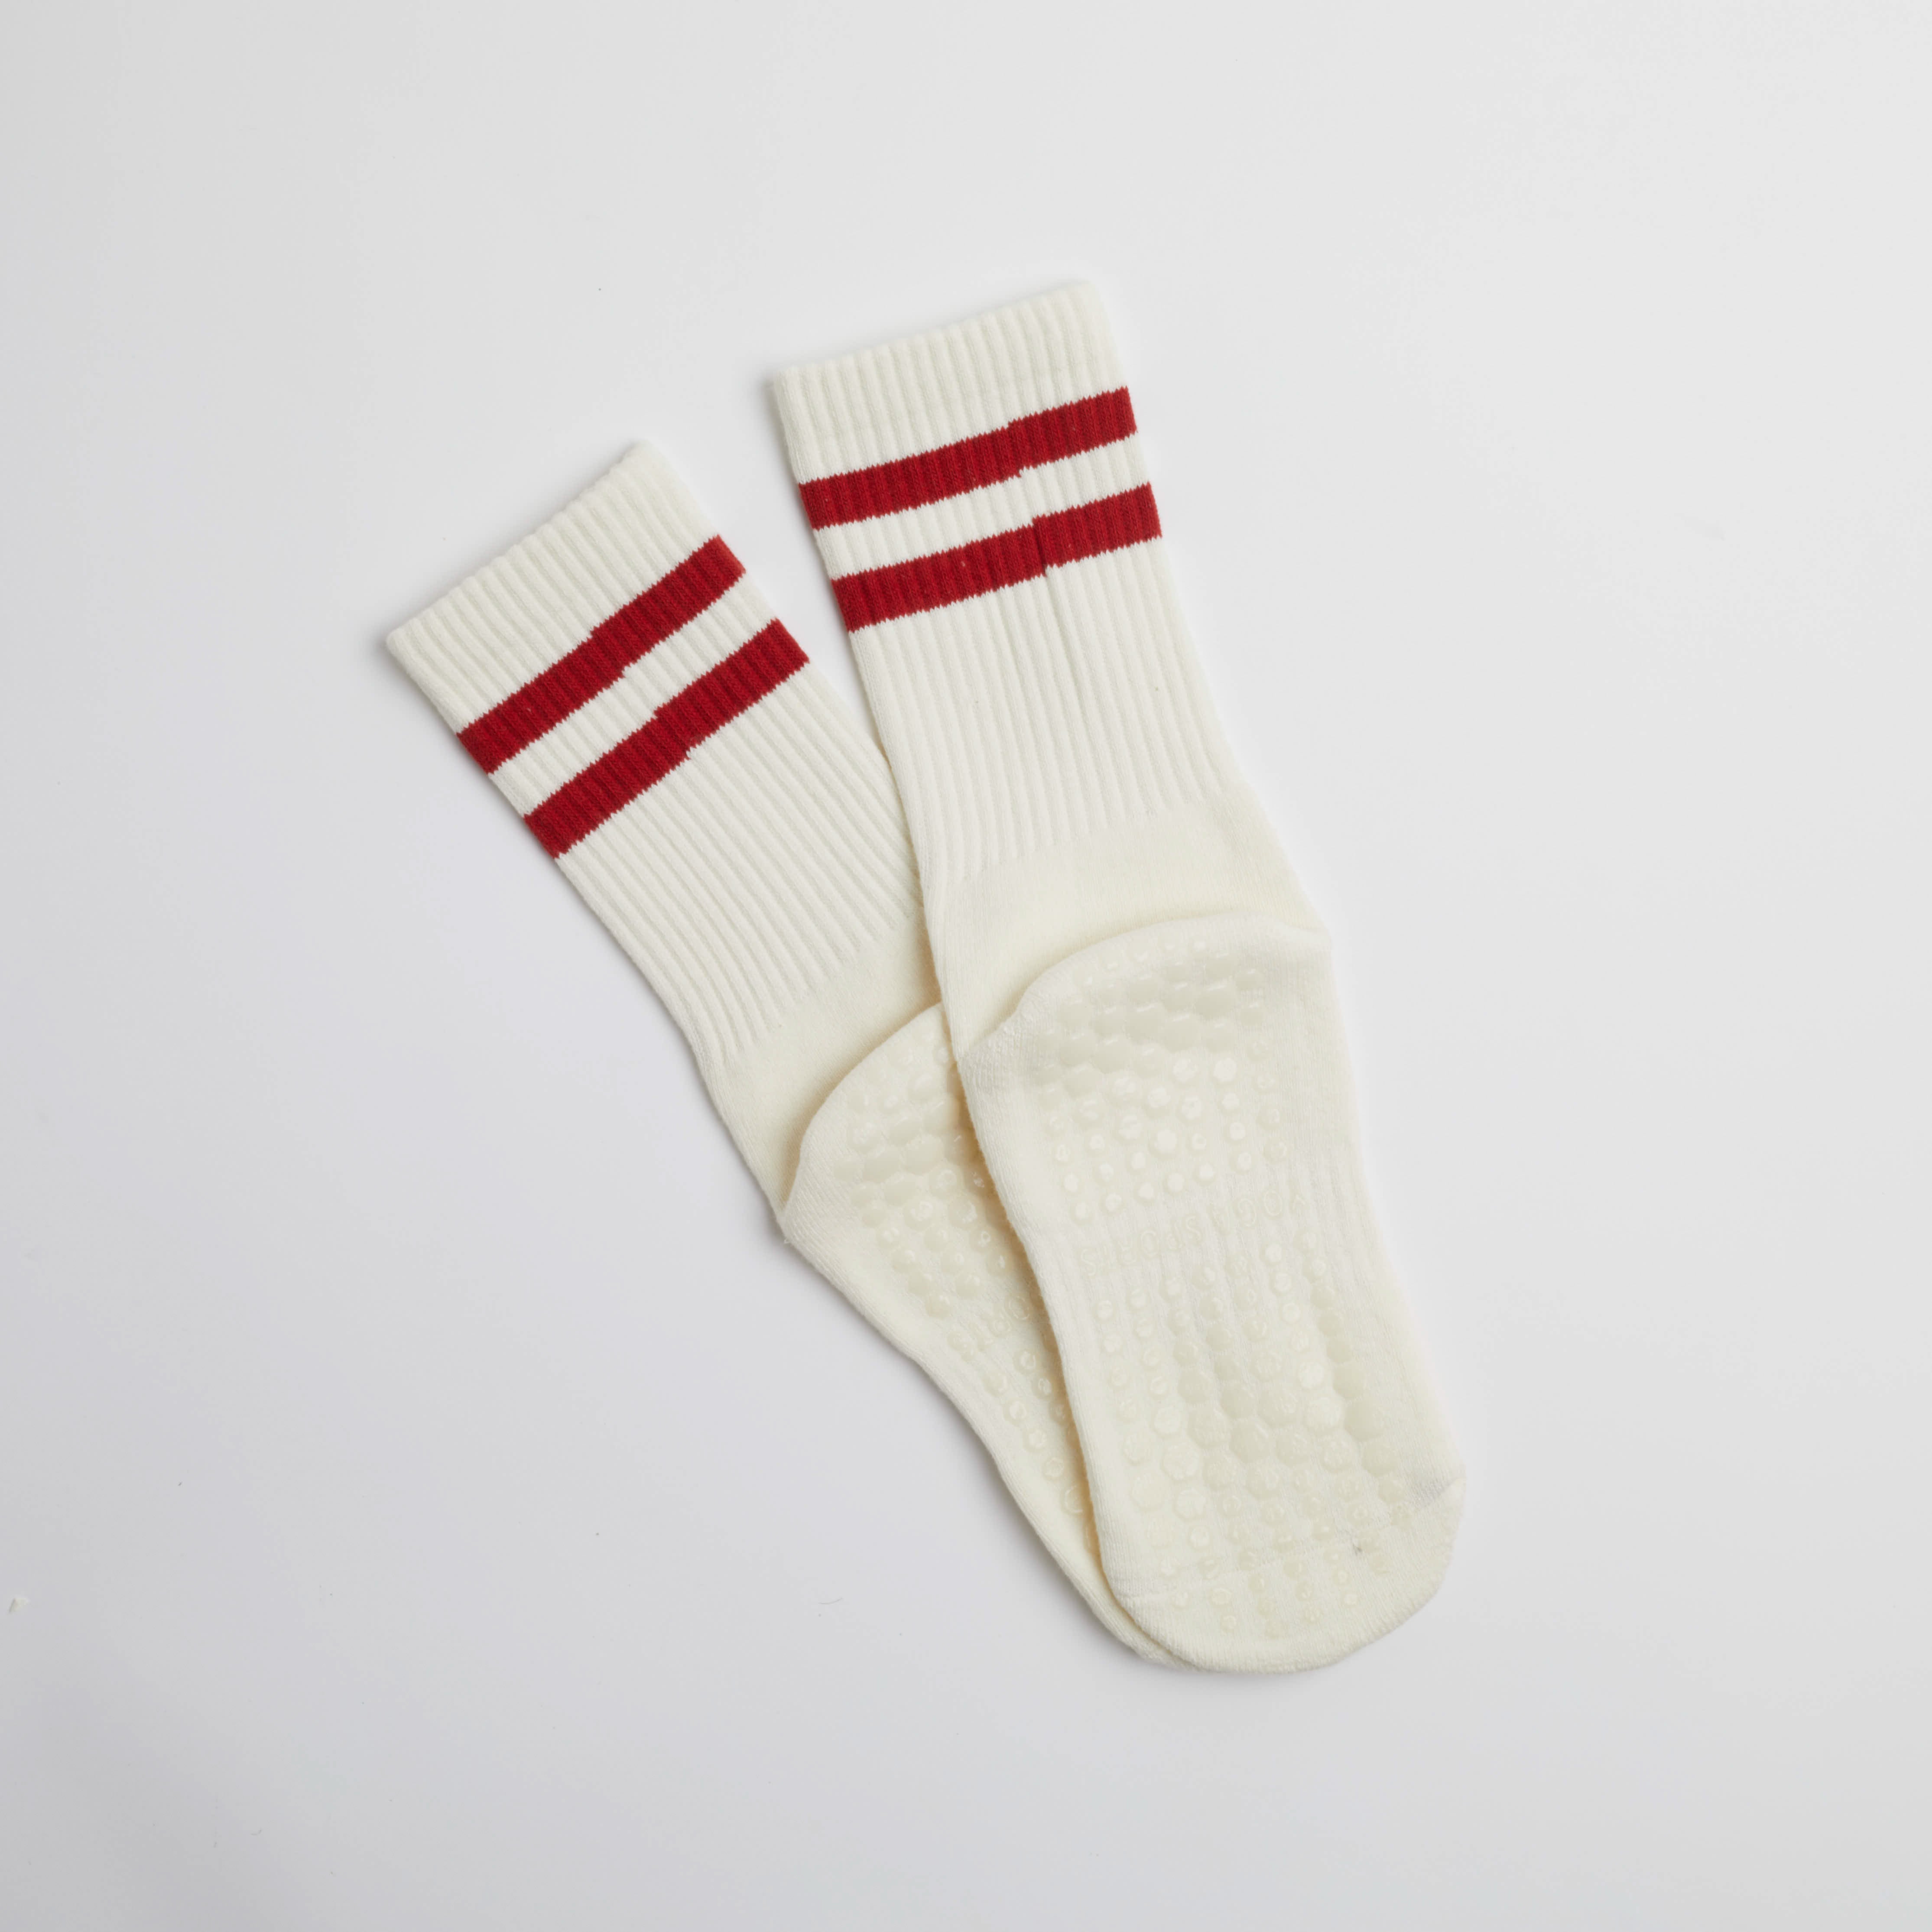 Cream &amp; Red Grippy Socks